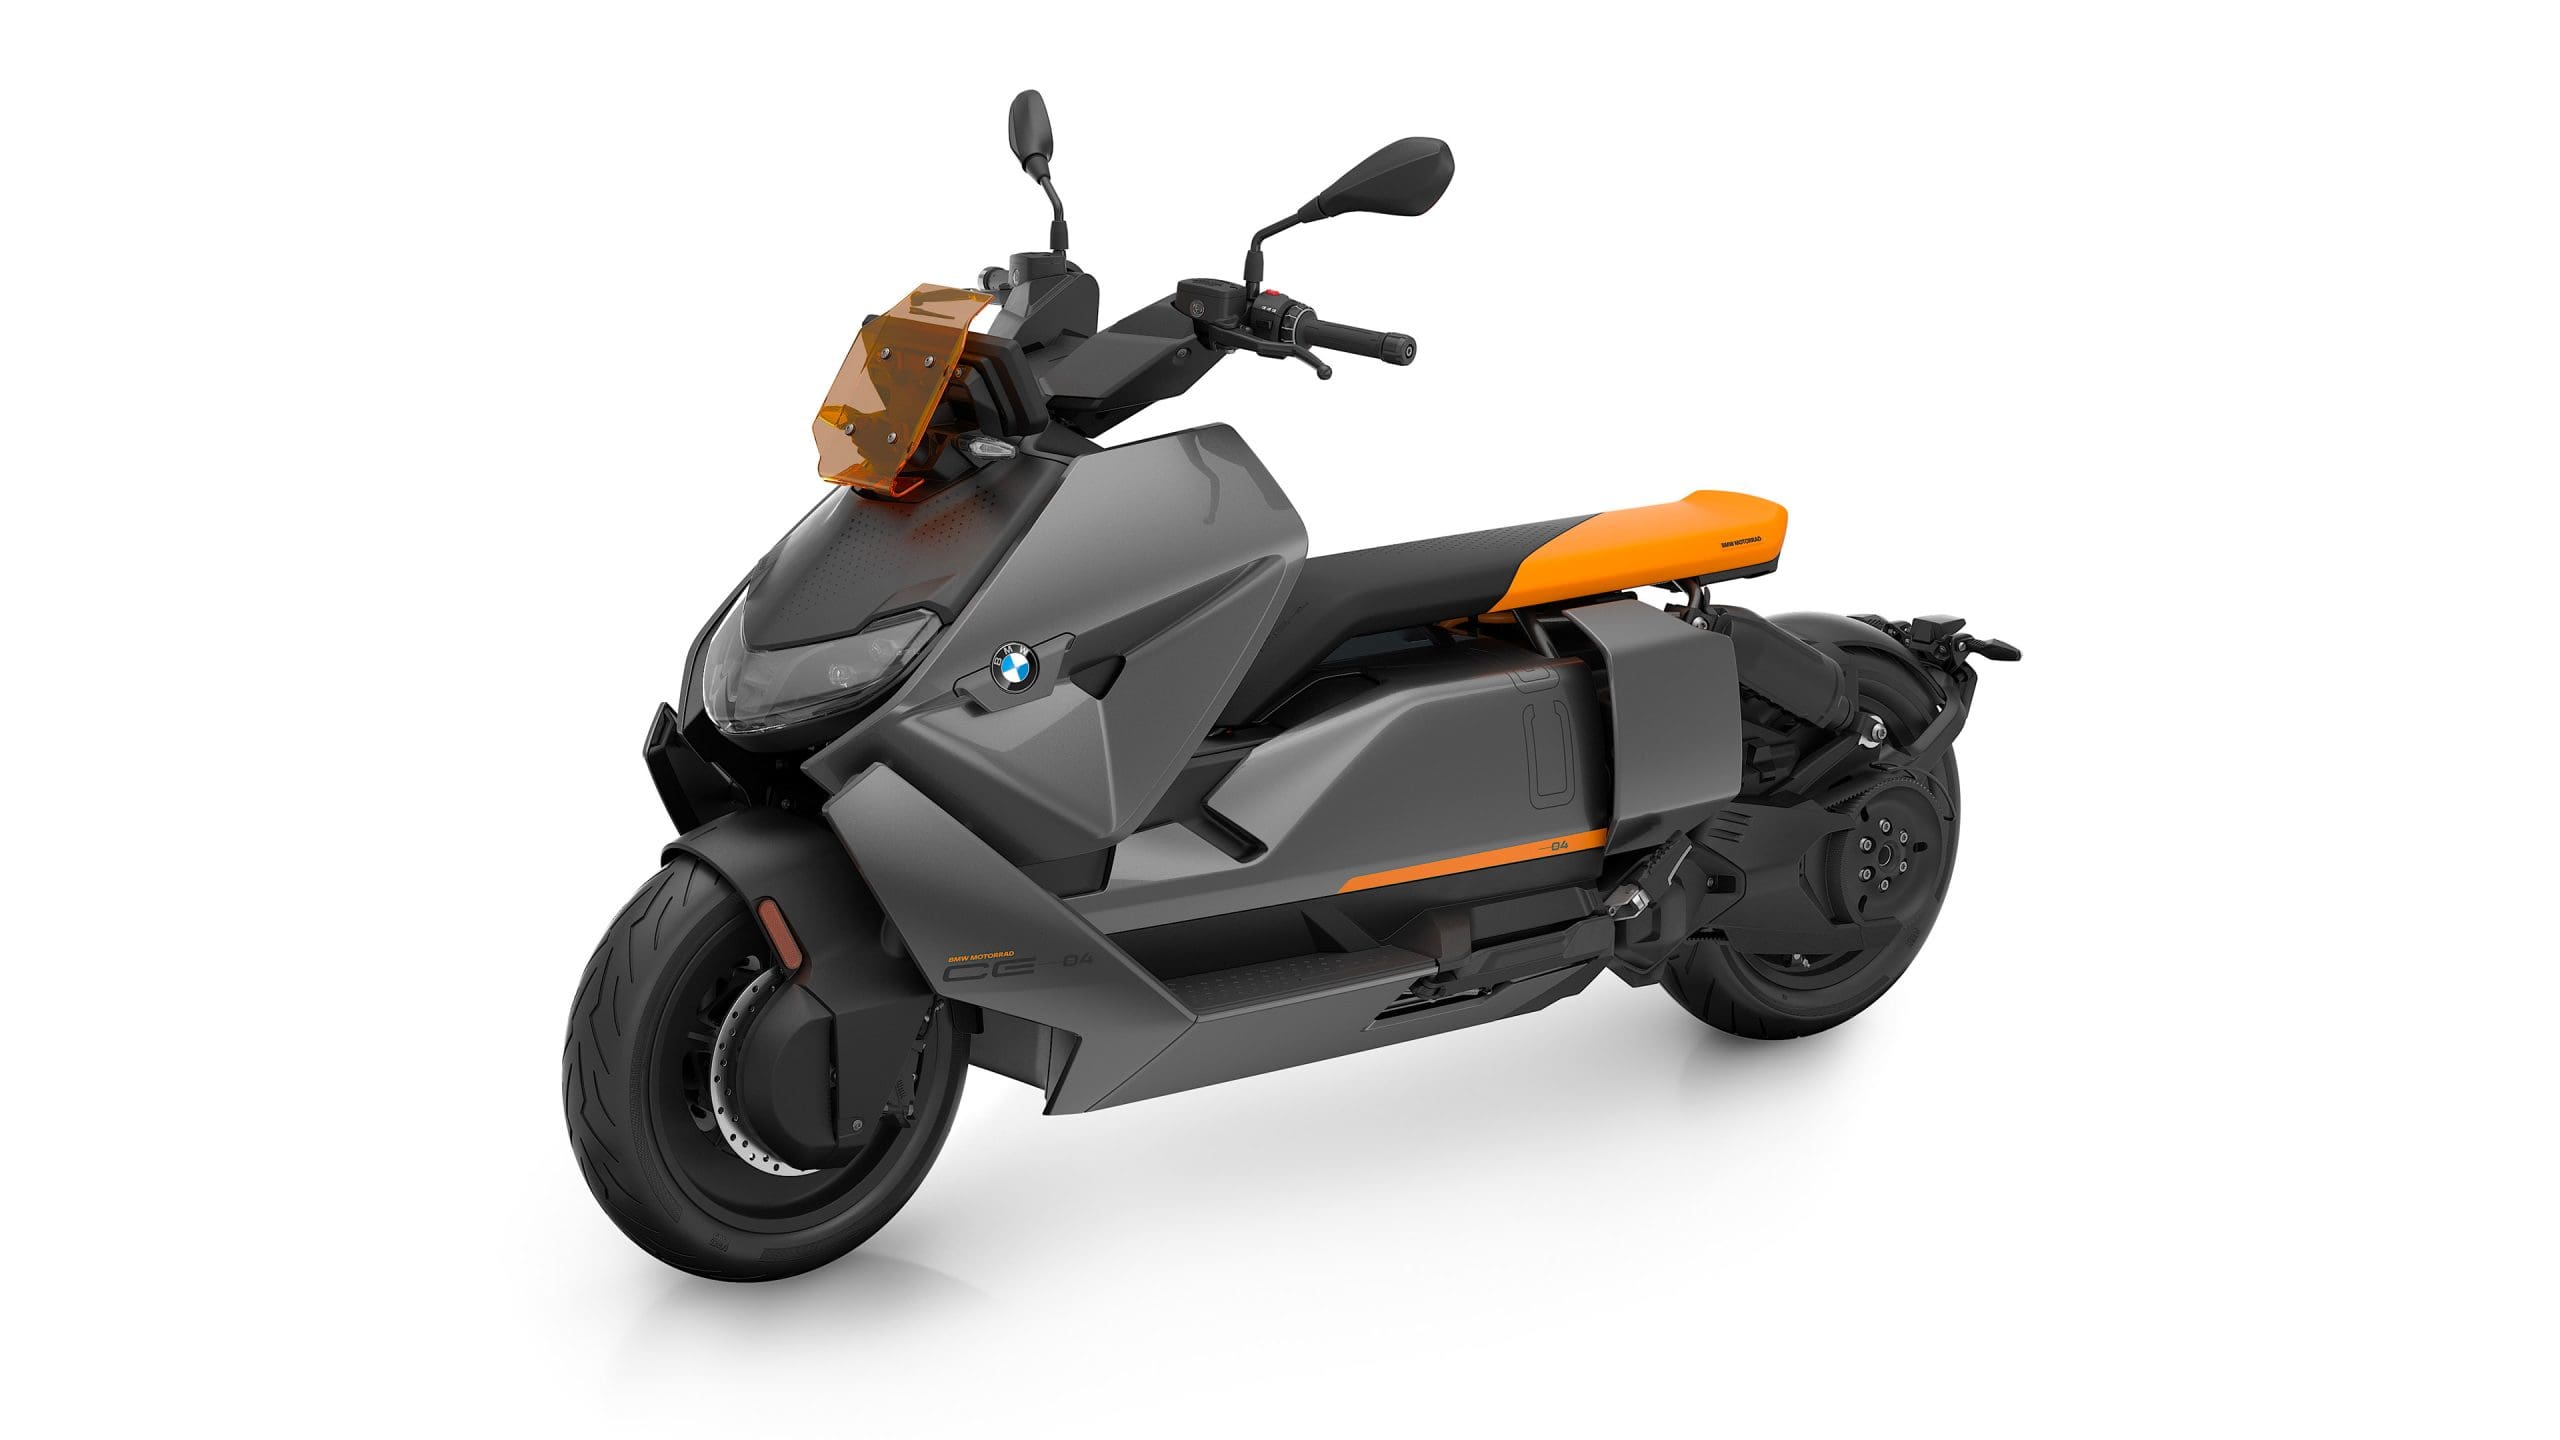 uheldigvis sfære sadel BMW 2023 CE-04 Electric Scooter Ride Review